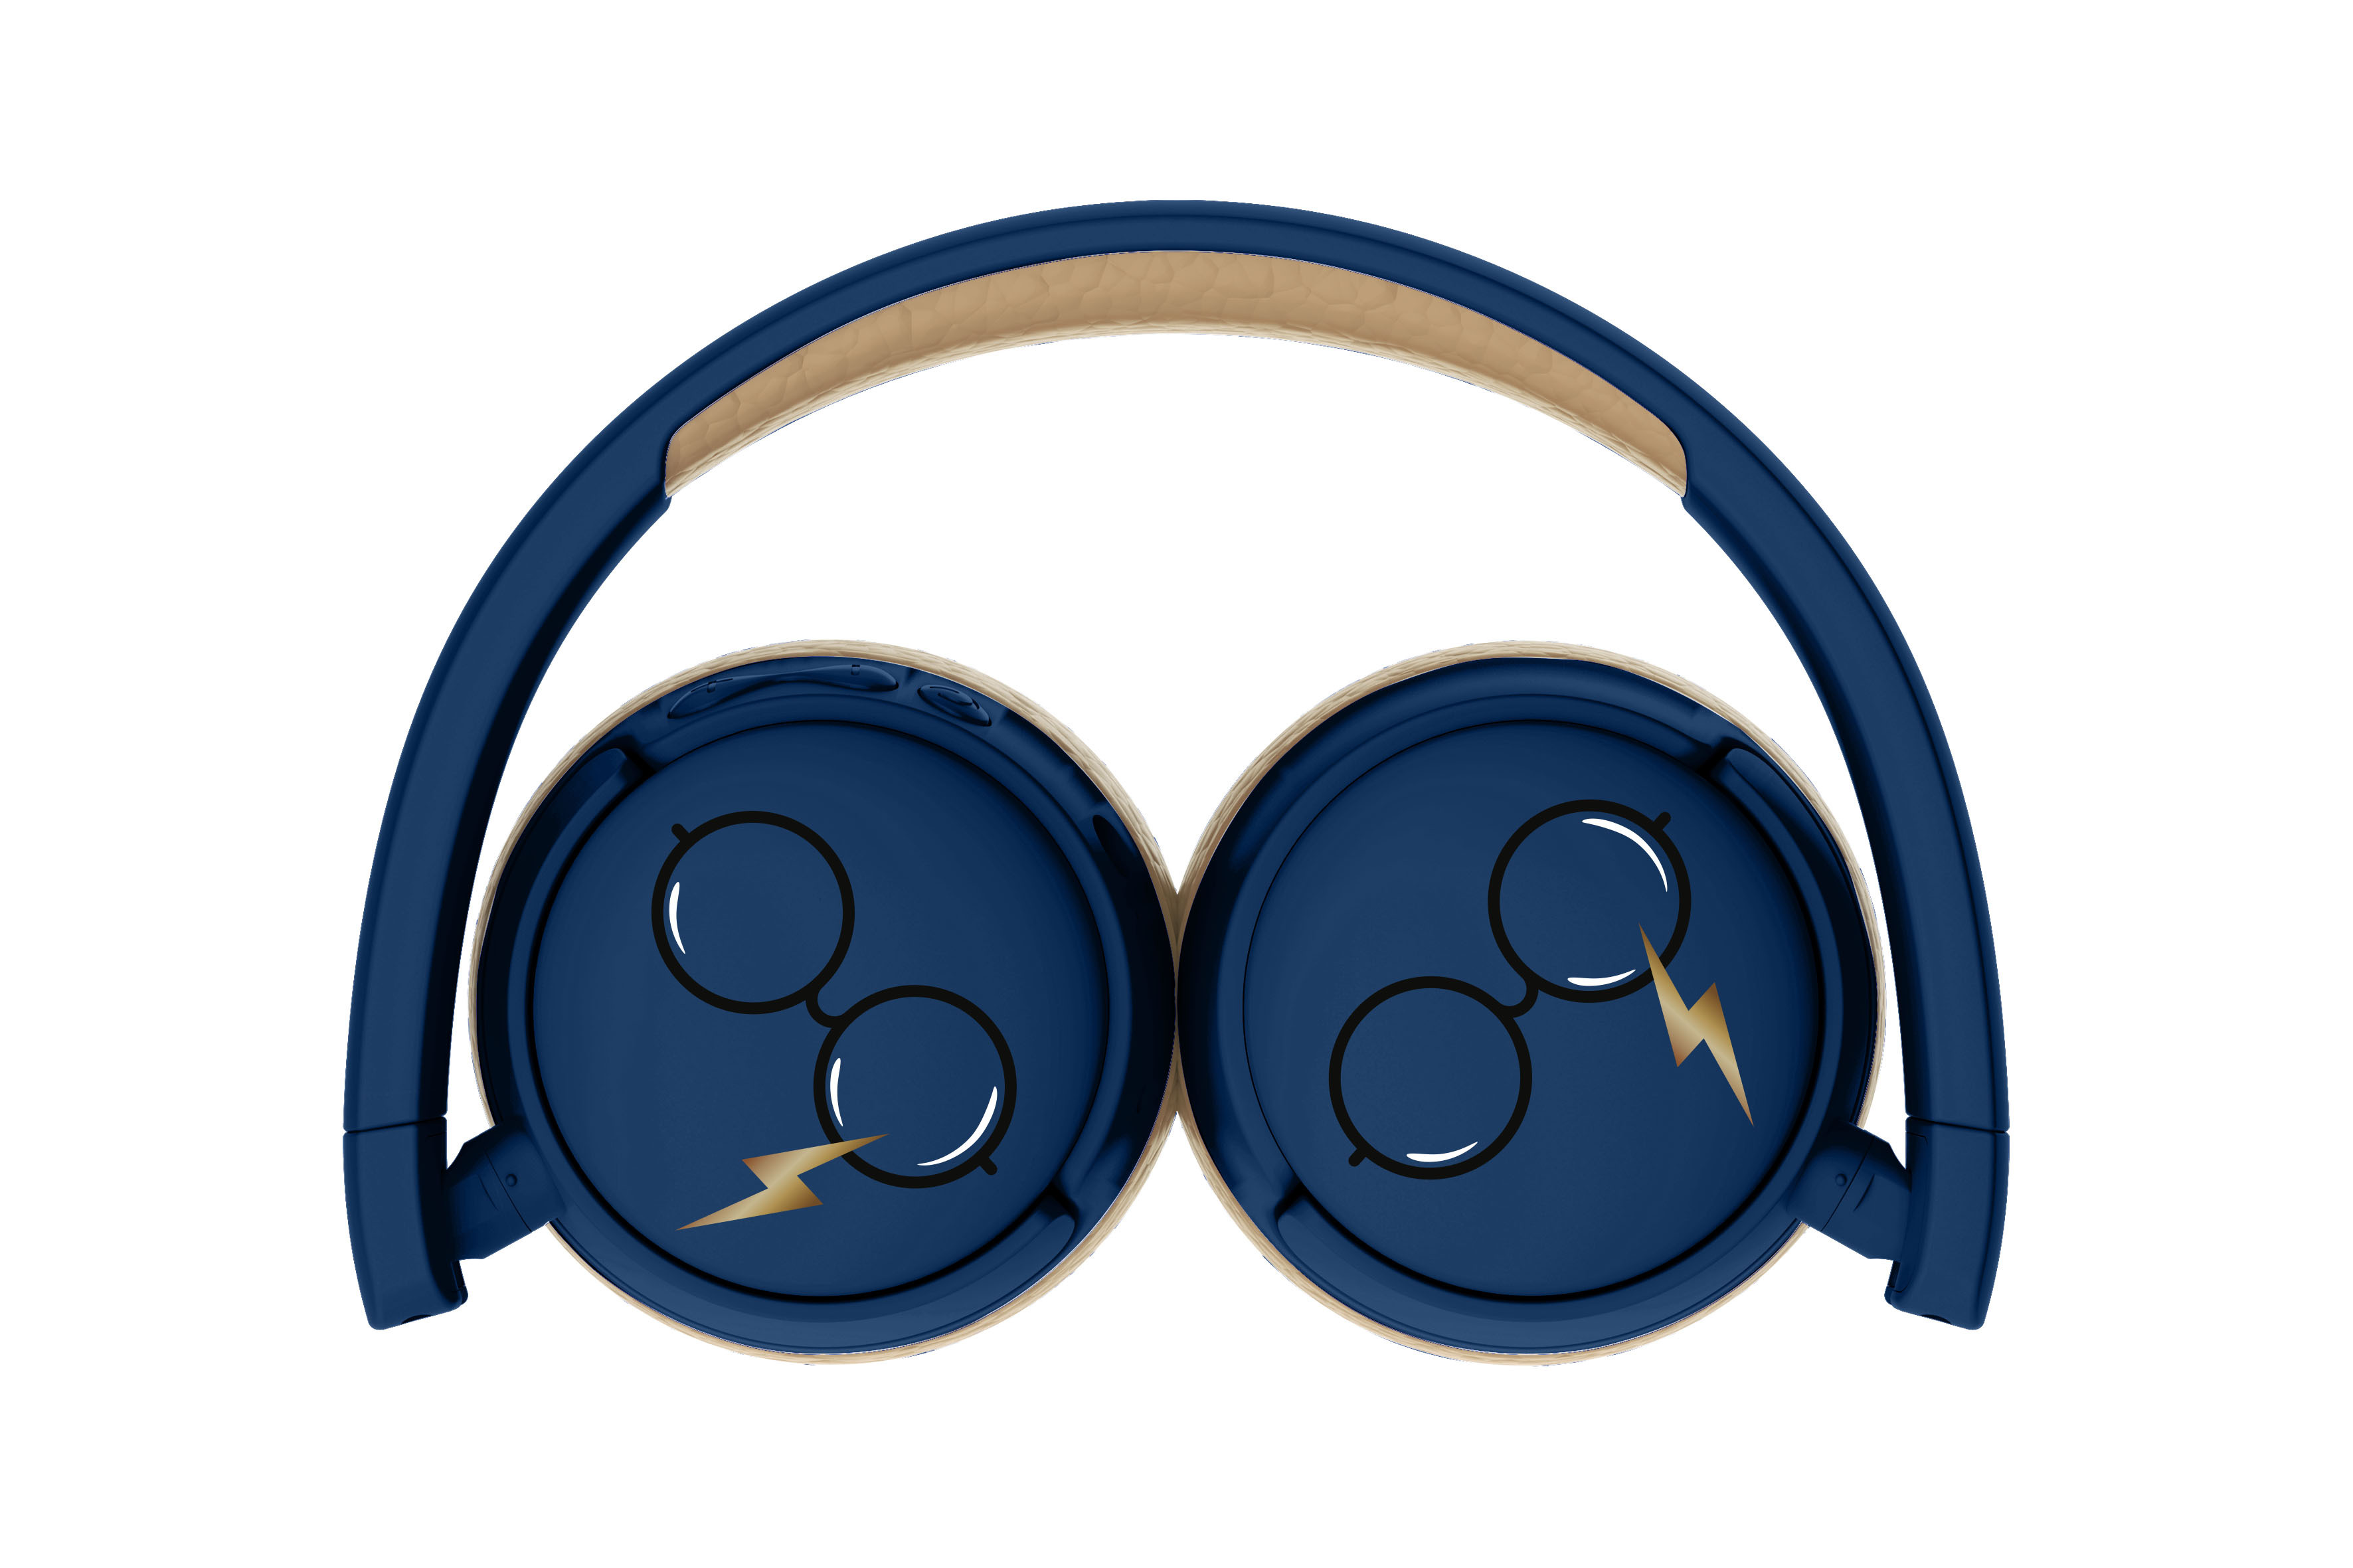 OTL TECHNOLOGIES Harry Potter, Over-ear Kopfhörer Bluetooth blau